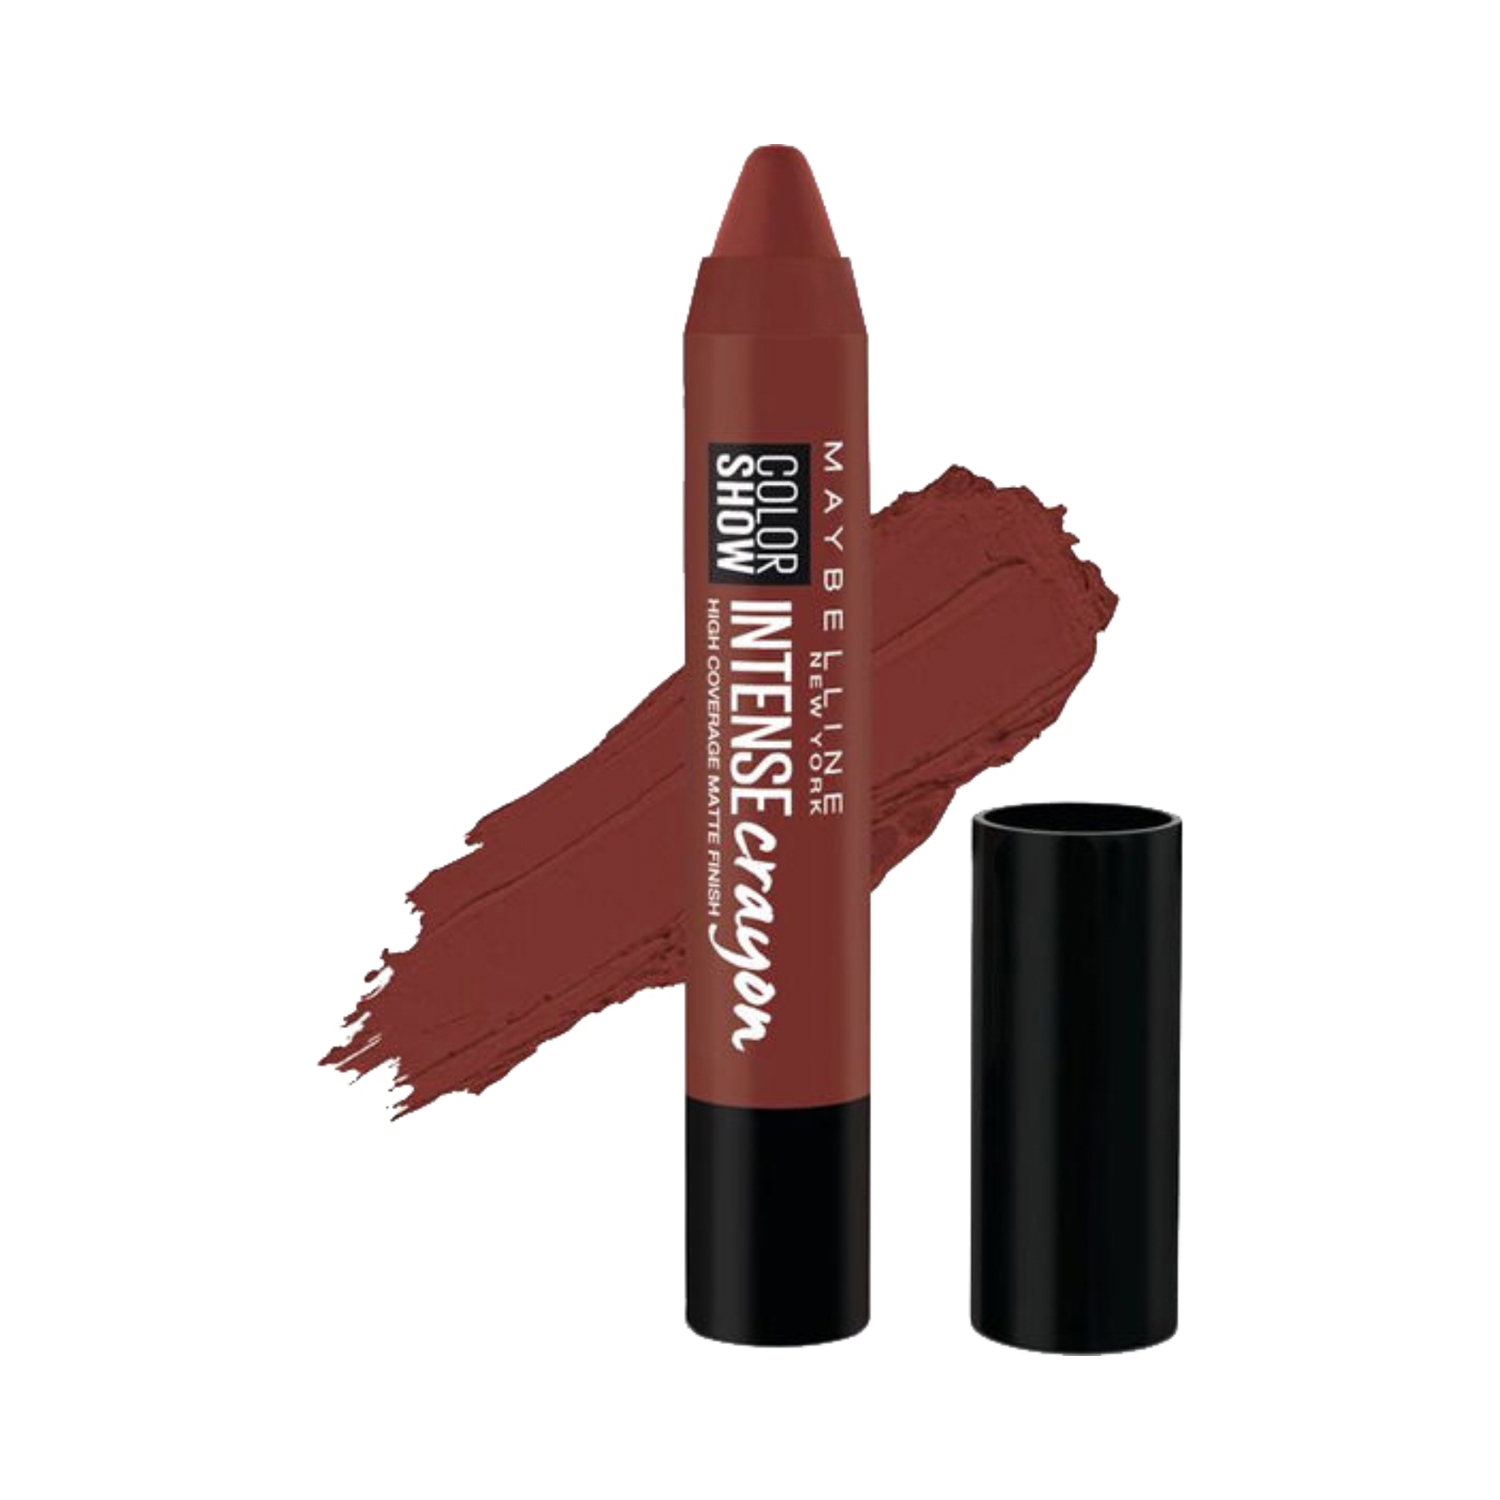 Maybelline New York | Maybelline New York Color Show Intense Lip Crayon SPF 17 - Dark Chocolate (3.5g)